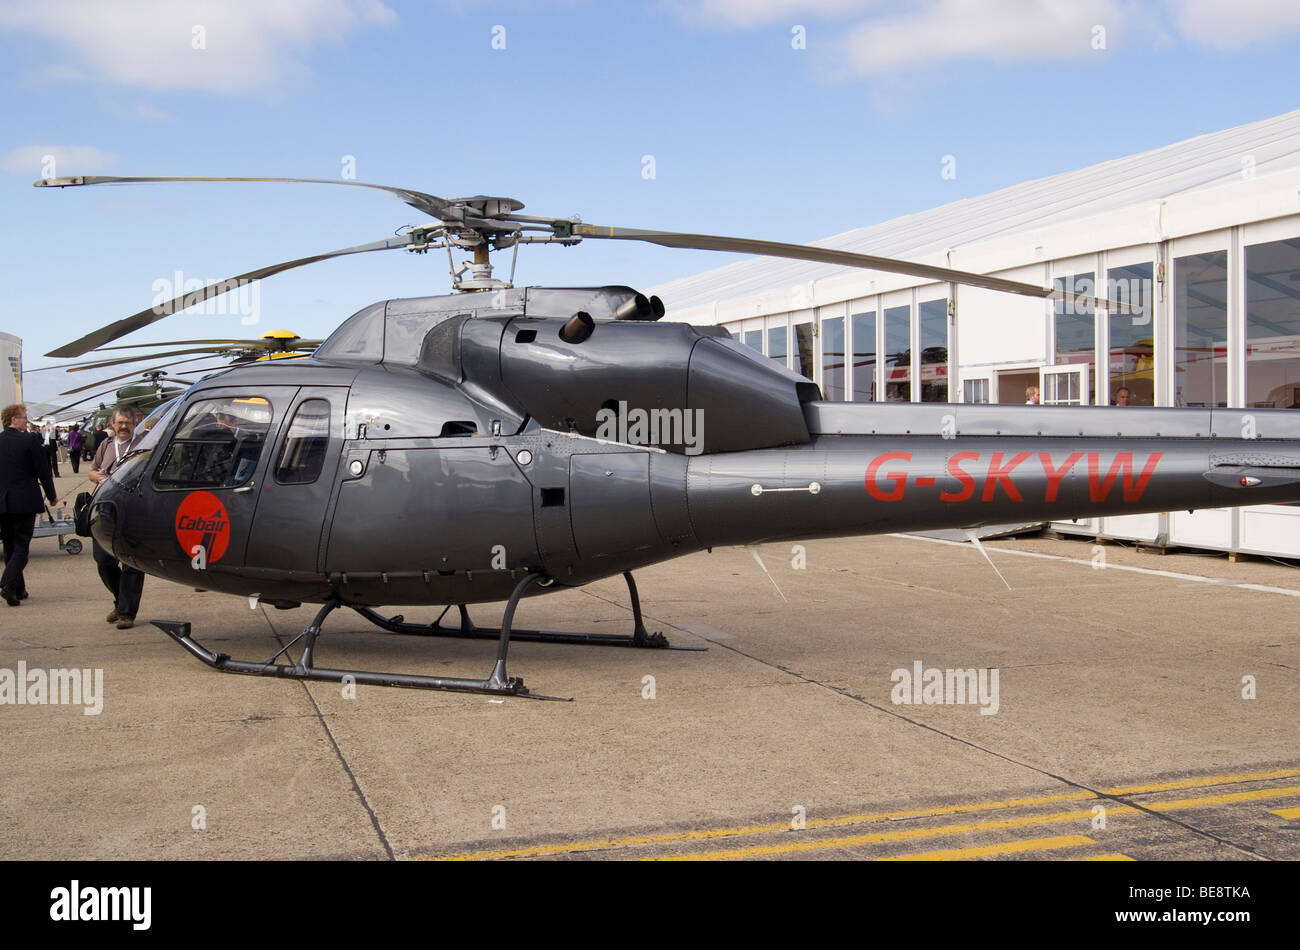 Cabair Gruppe Aerospatiale AS355 F1 Ecureuil II Hubschrauber G-SKYW bei Helitech Trade Show Duxford England Vereinigtes Königreich UK Stockfoto